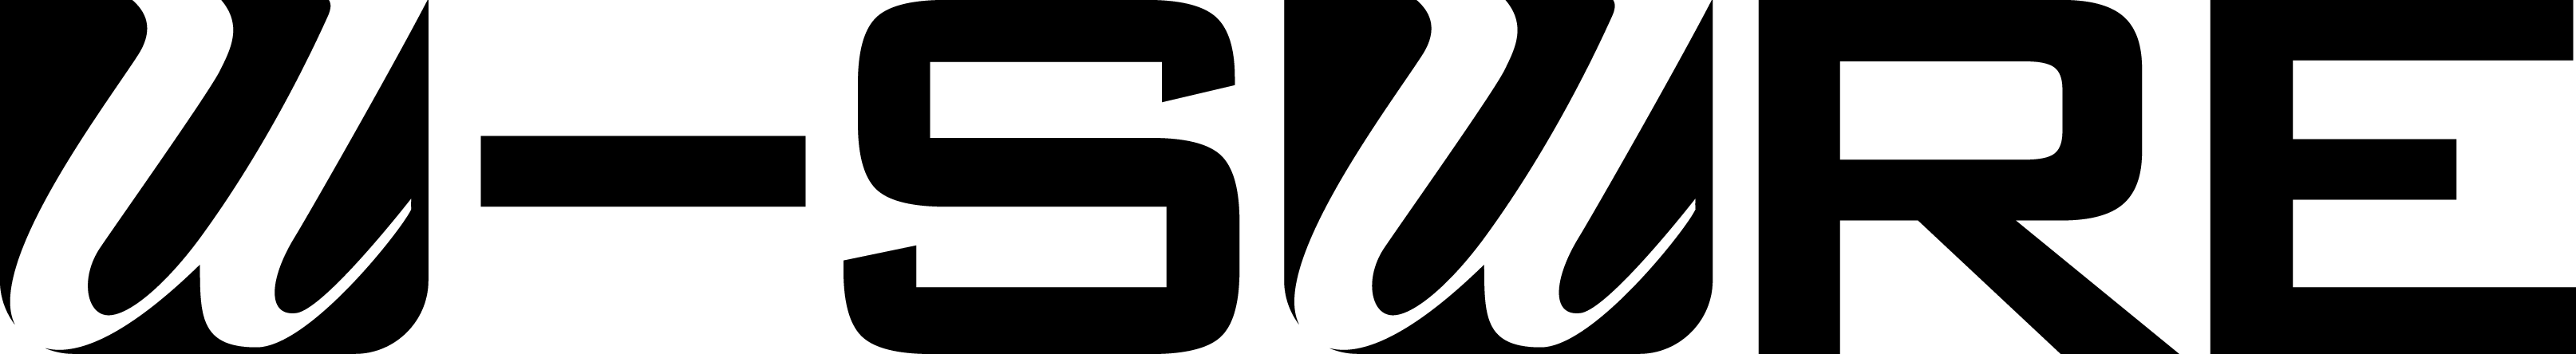 GRP logo image